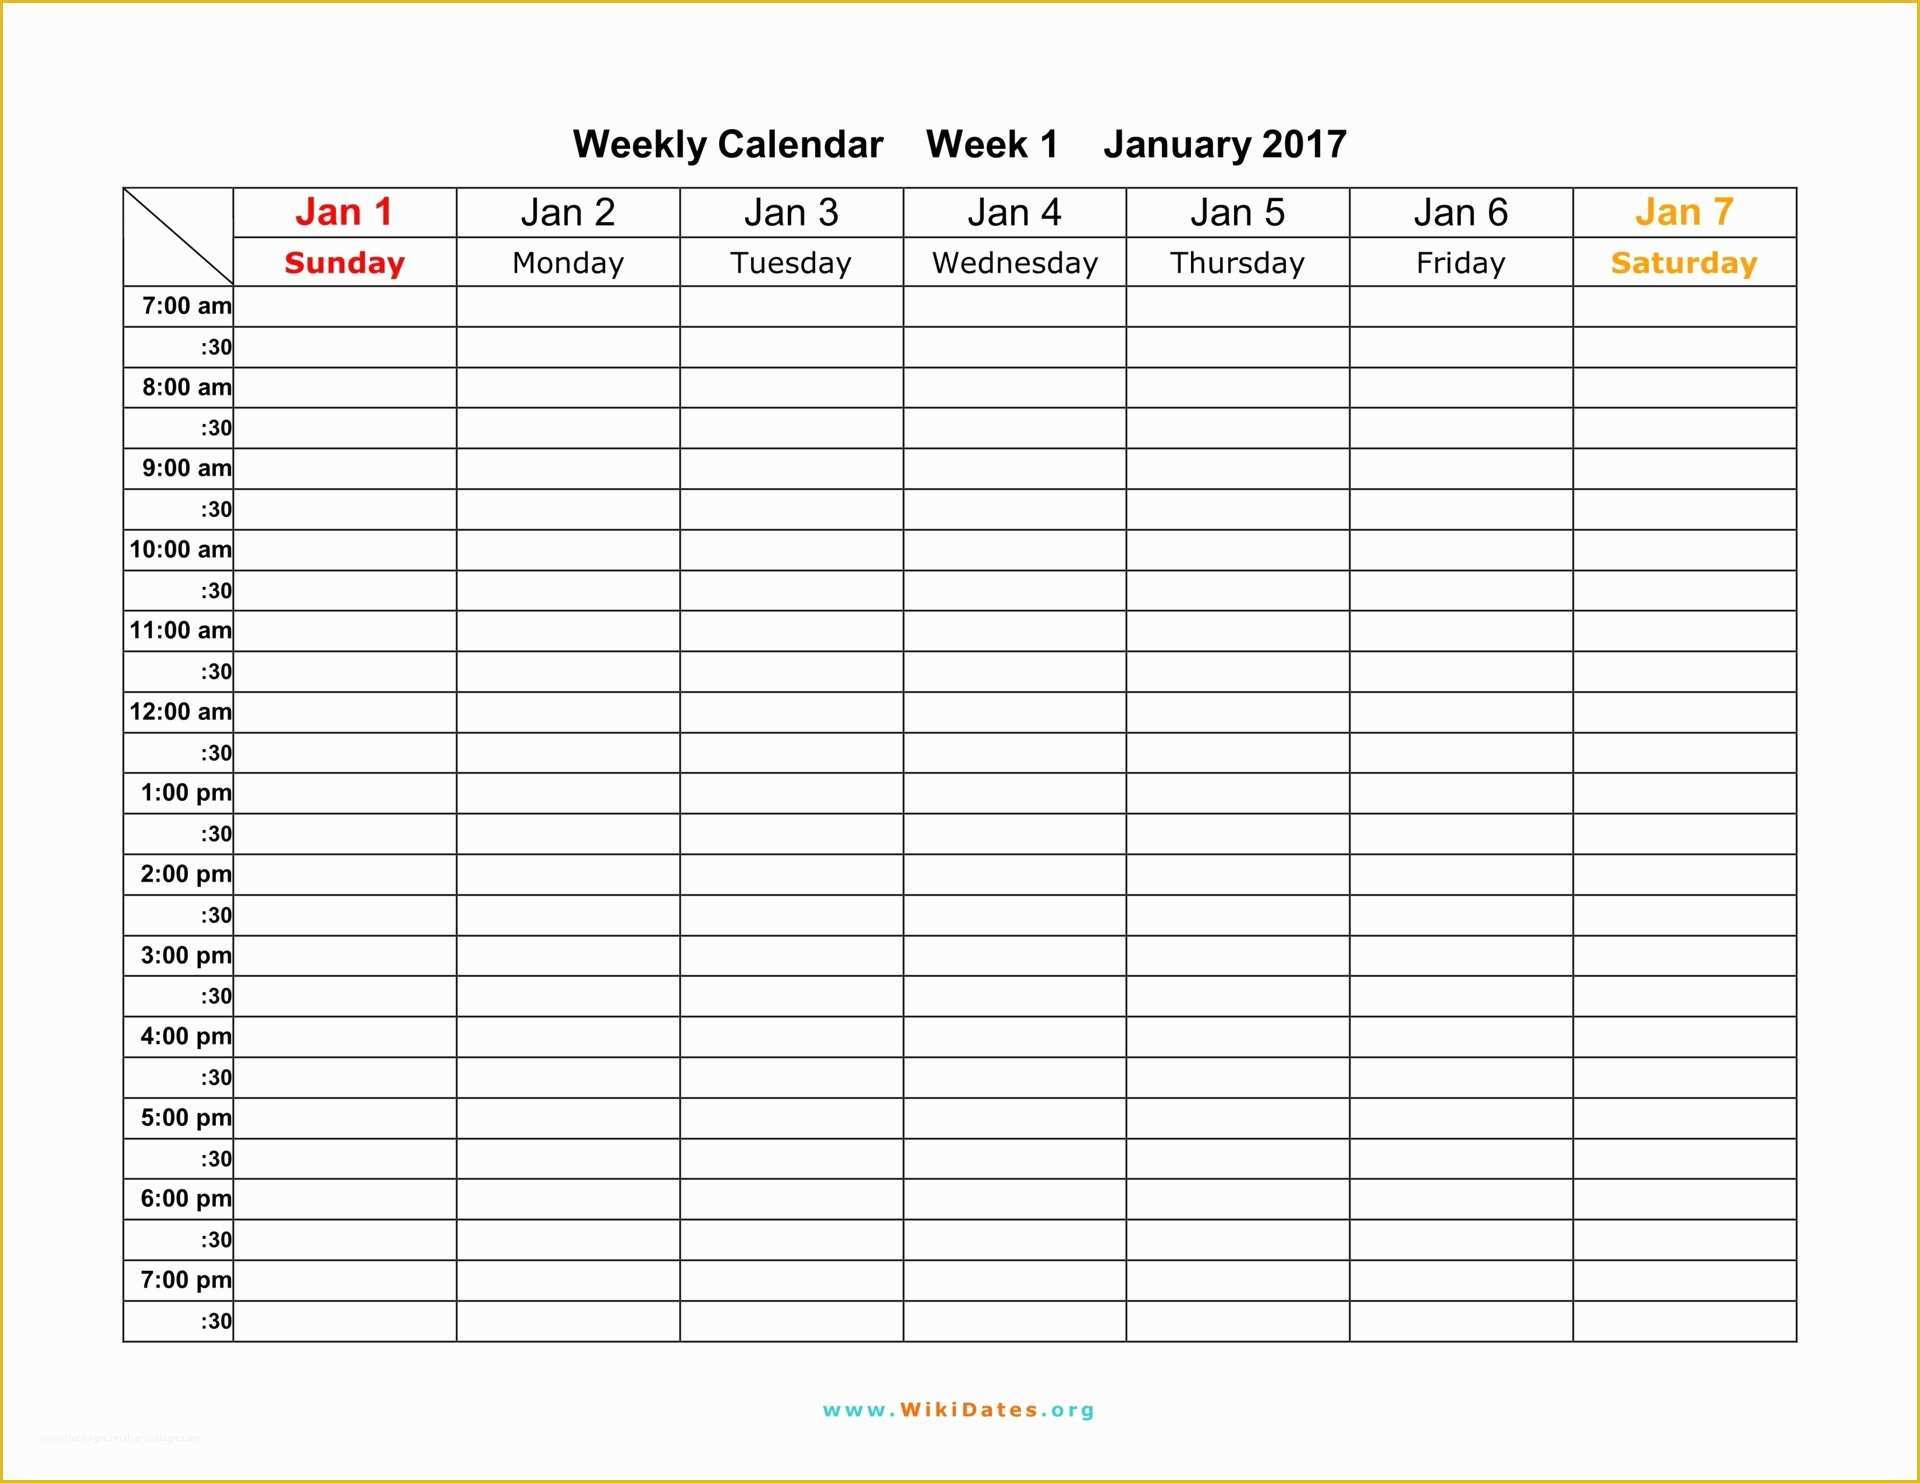 Free Work Calendar Template Of Weekly Calendar Download Weekly Calendar 2017 and 2018